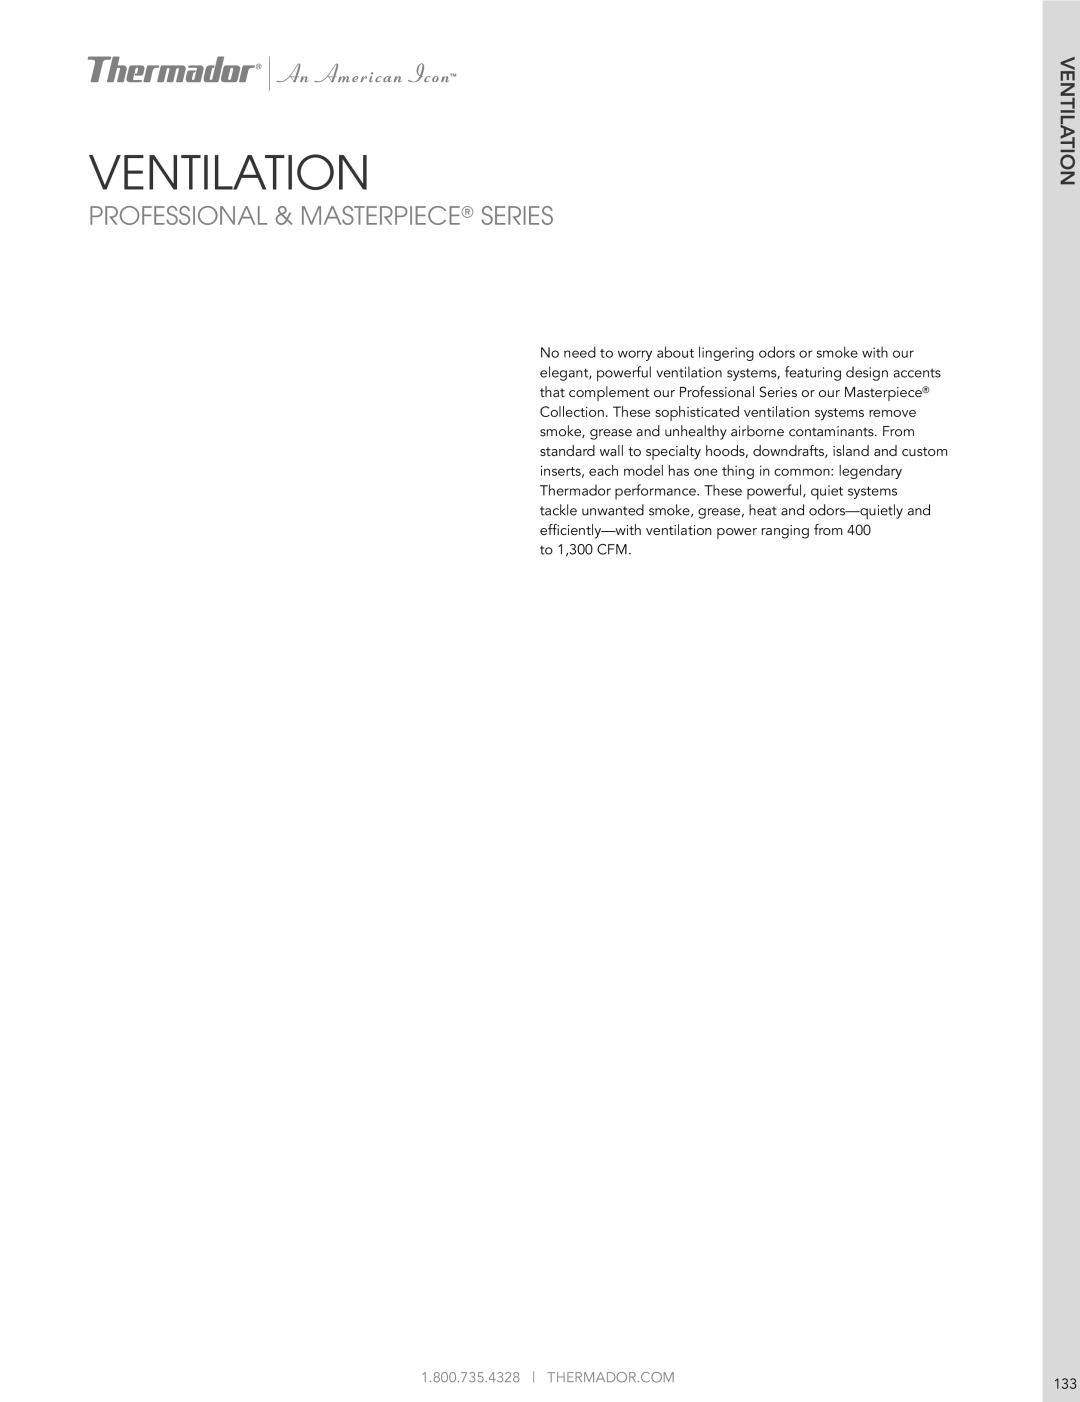 Thermador HMWB36FS manual Ventilation, Professional & Masterpiece Series, Thermador.Com 